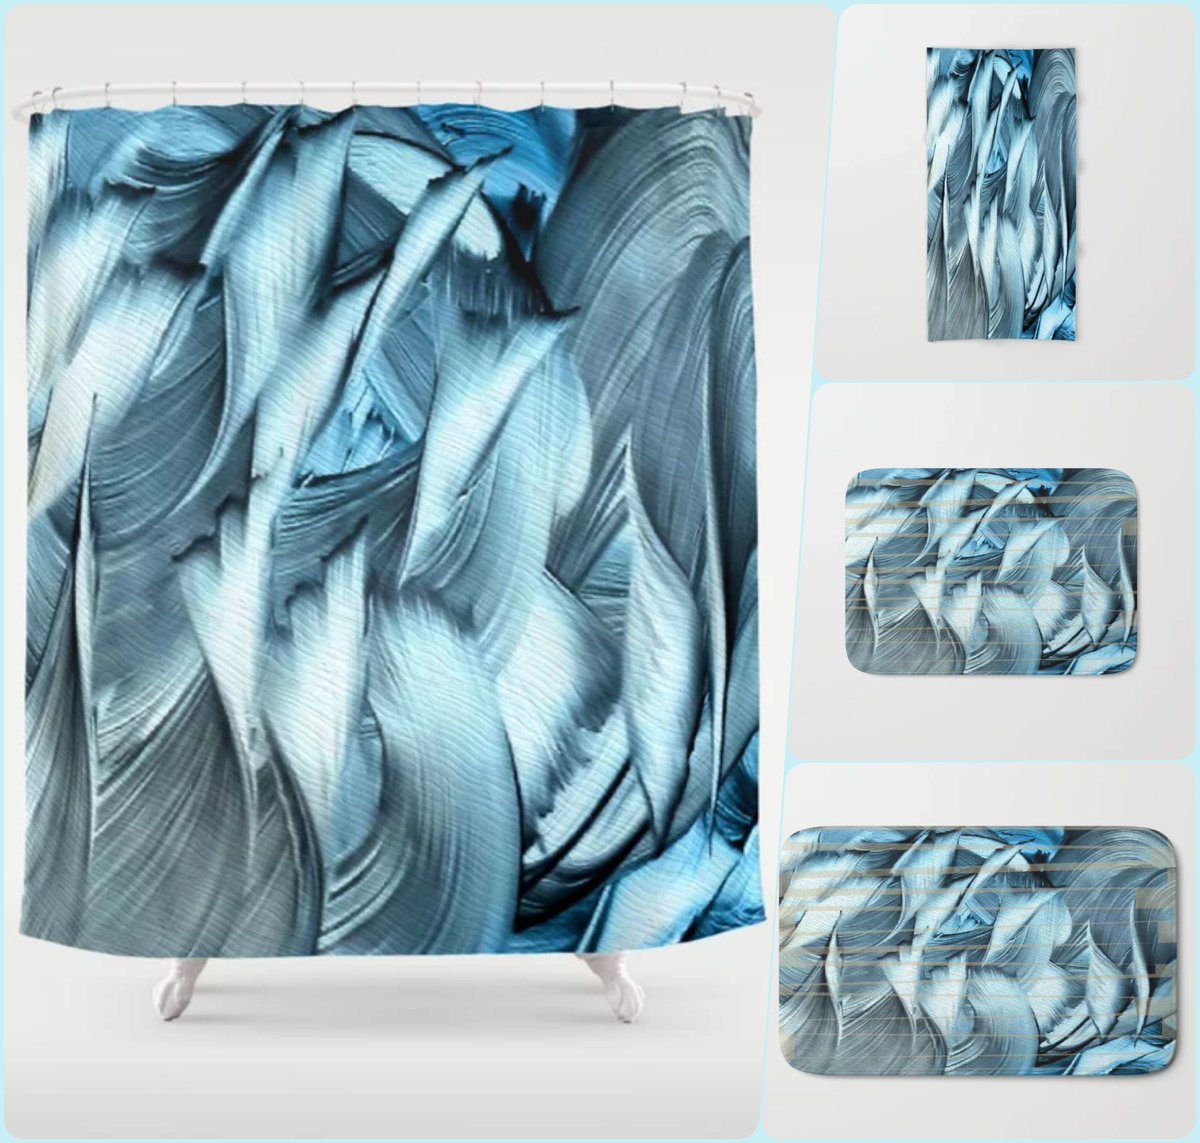 Qebui Blue Shower Curtain~by Art Falaxy~
~Art that Elevates your Shower!~
#artfalaxy #shower #bath #towels #rugs #art #society6 #homedecor #Society6max #swirls #modern #trendy #accessories #accents #mats #gifts

society6.com/product/qebui-…
COLLECTION: society6.com/art/qebui-blue…